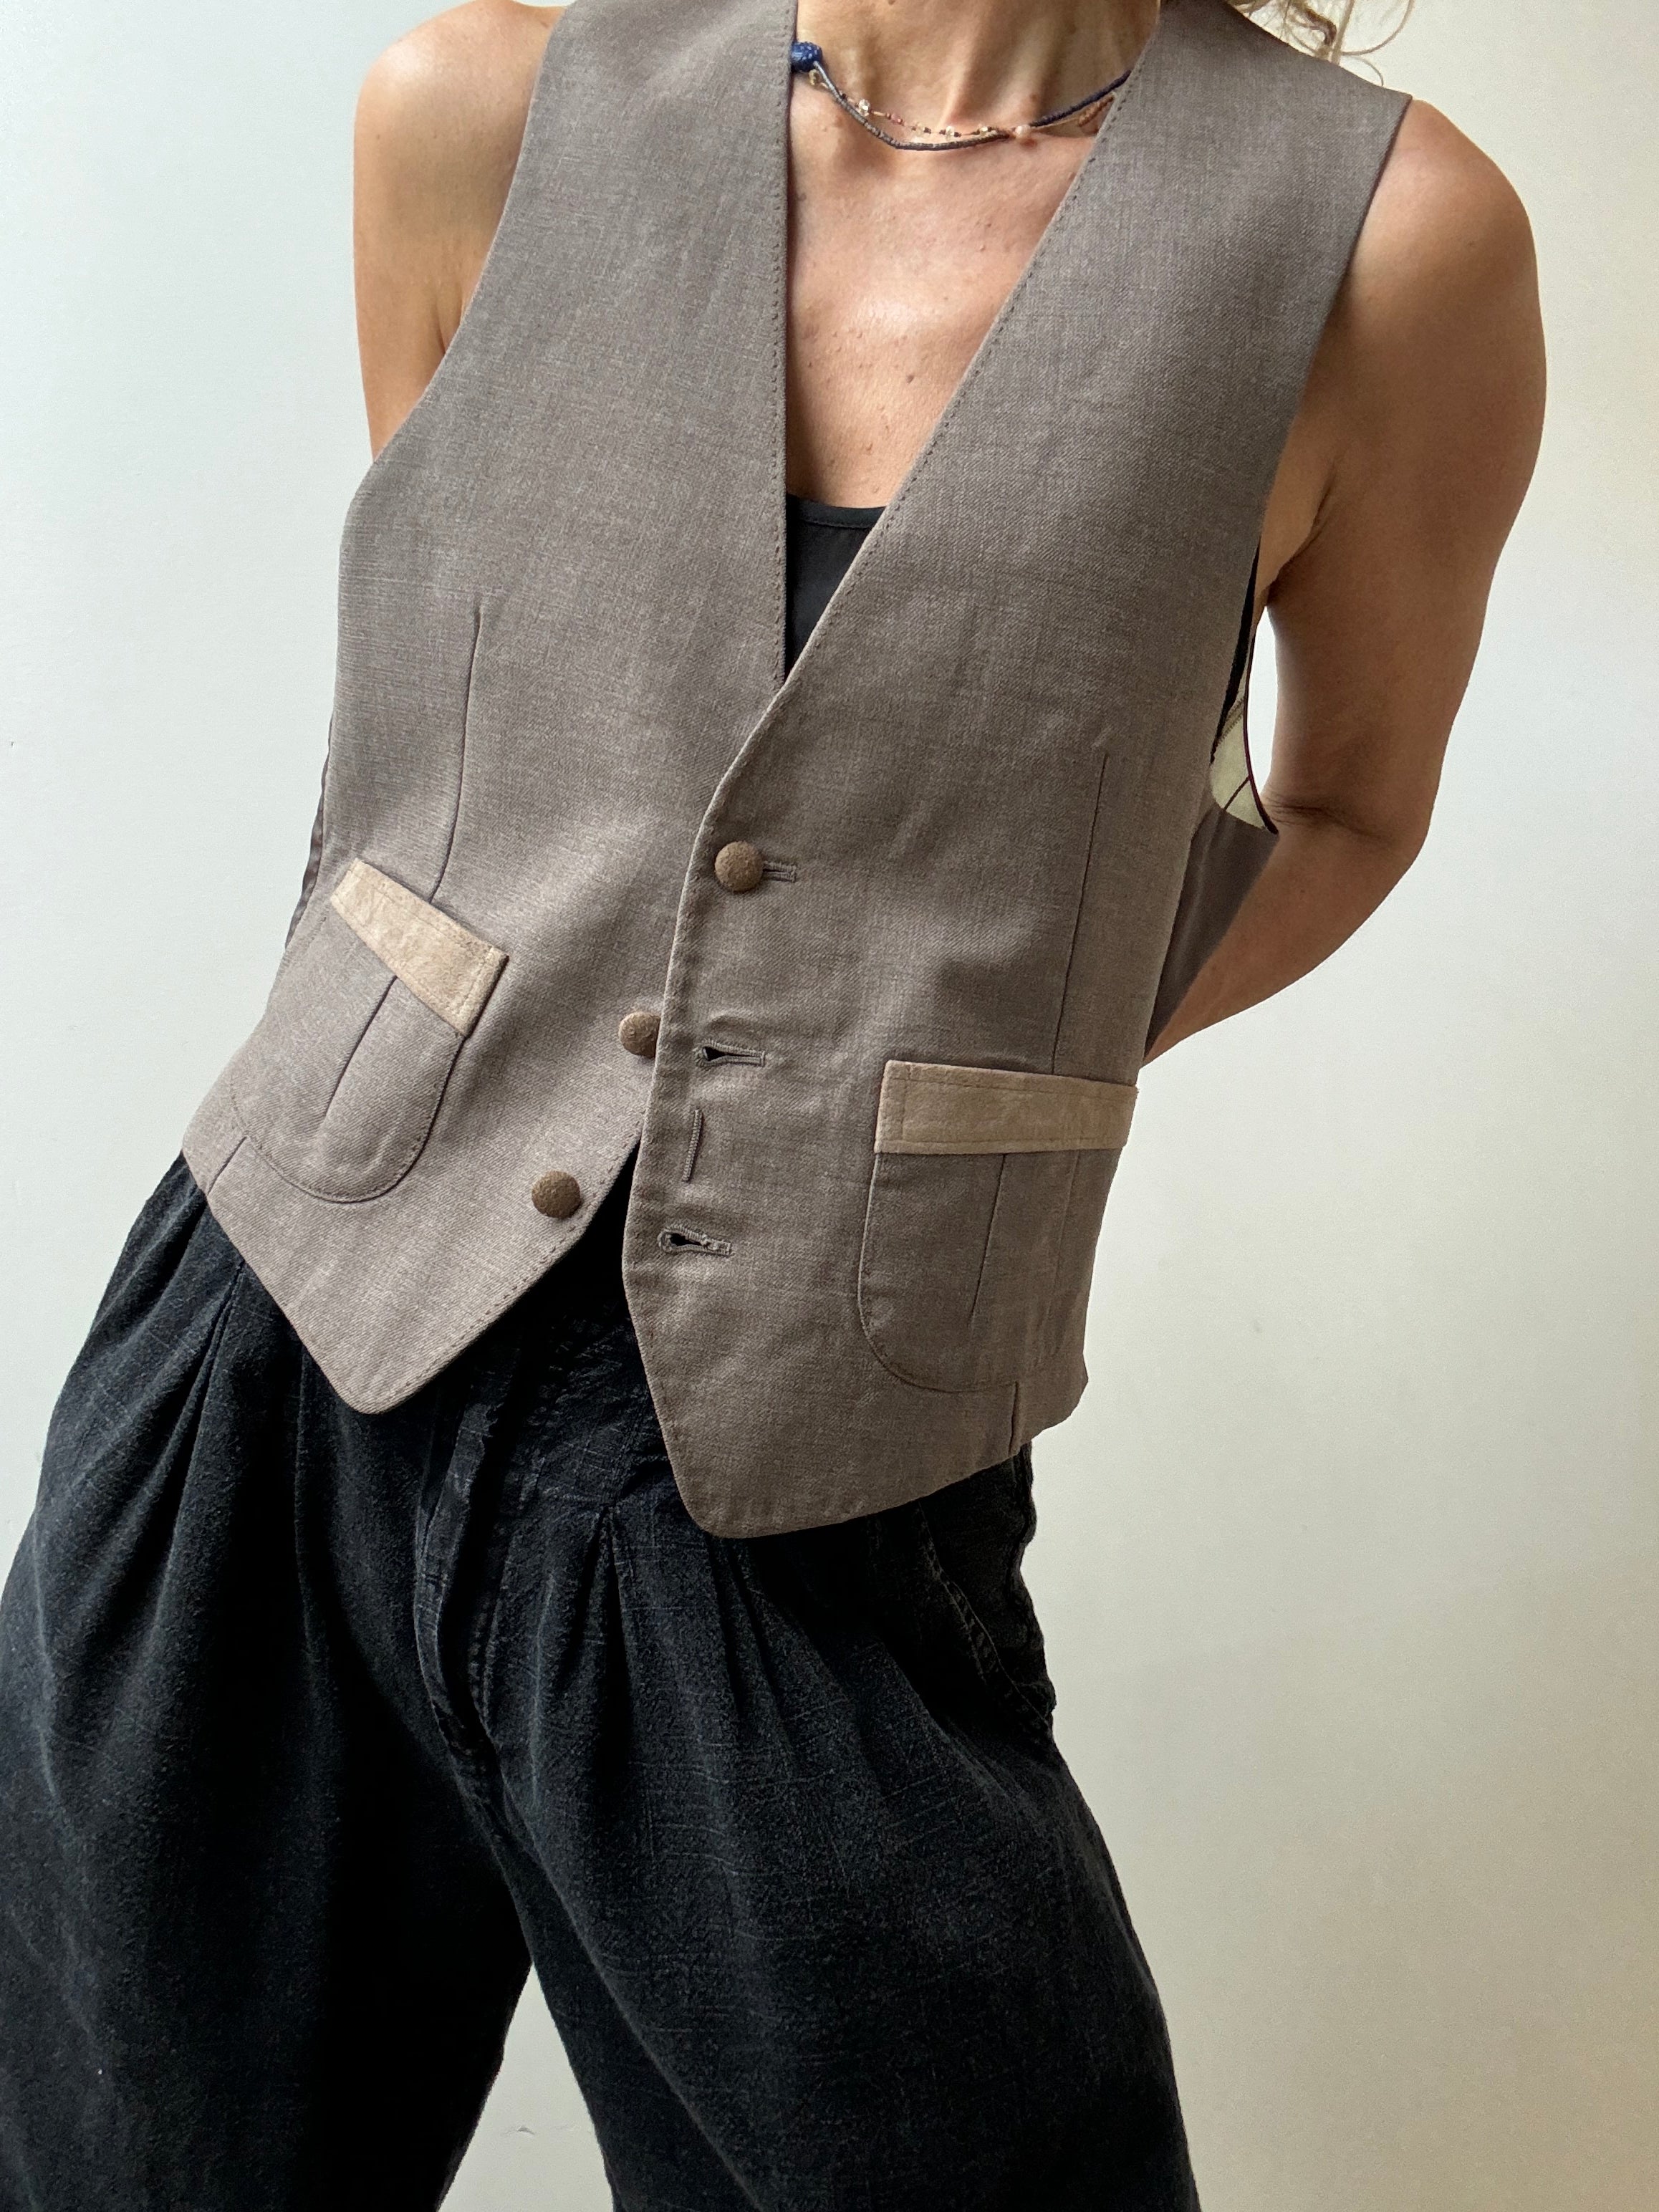 Future Nomads Vests Medium-Large Vintage Suit Vest with Suede